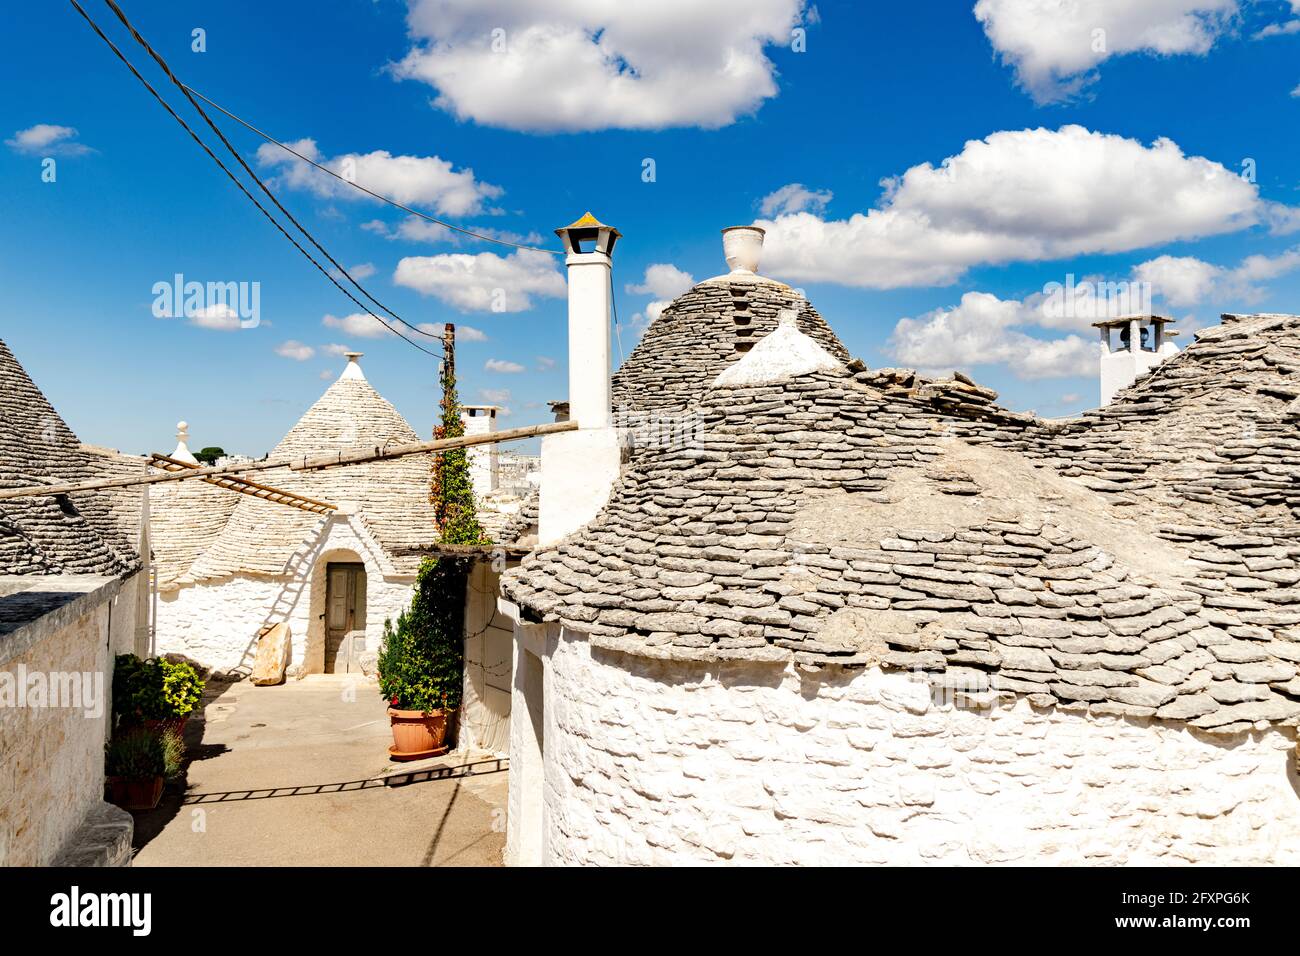 Traditional whitewashed Trulli houses, Alberobello, UNESCO World Heritage Site, province of Bari, Apulia, Italy, Europe Stock Photo